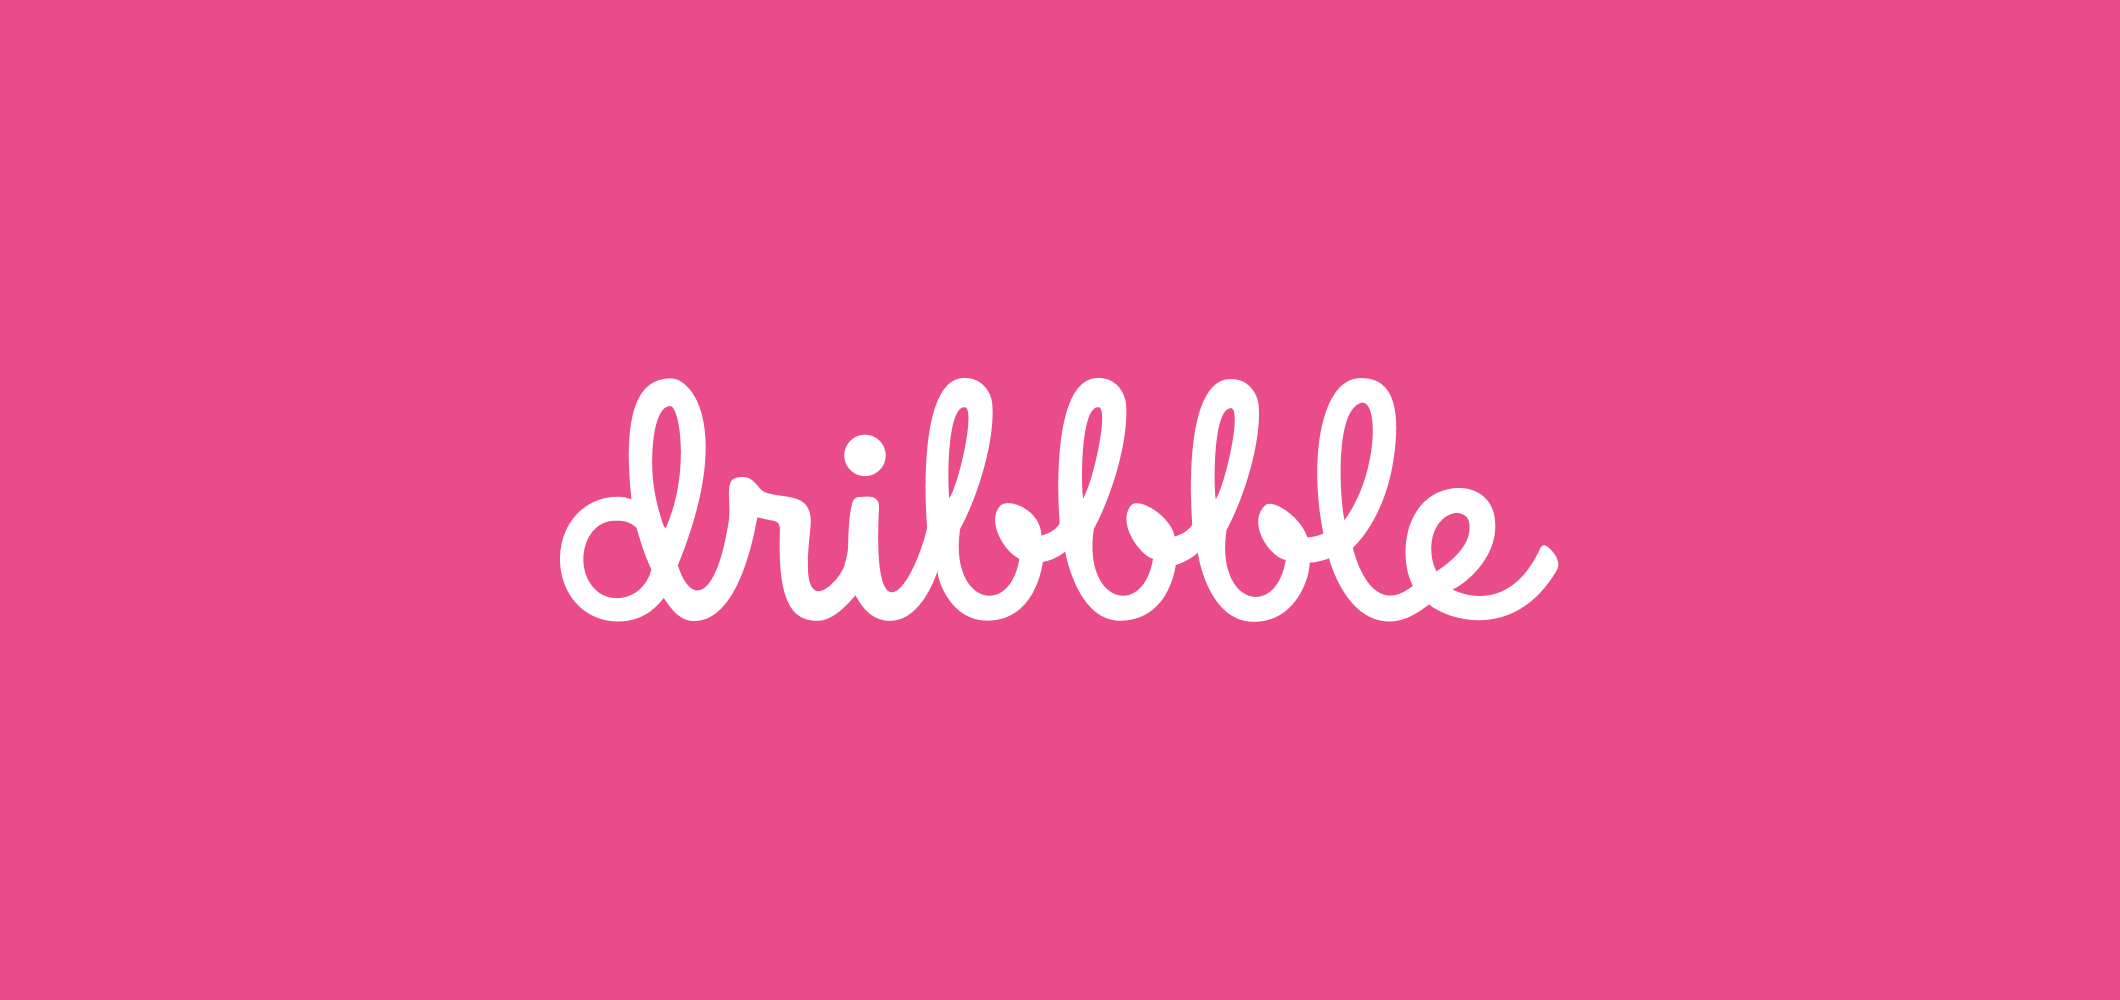 Dribbble Twitter - Dribbble L